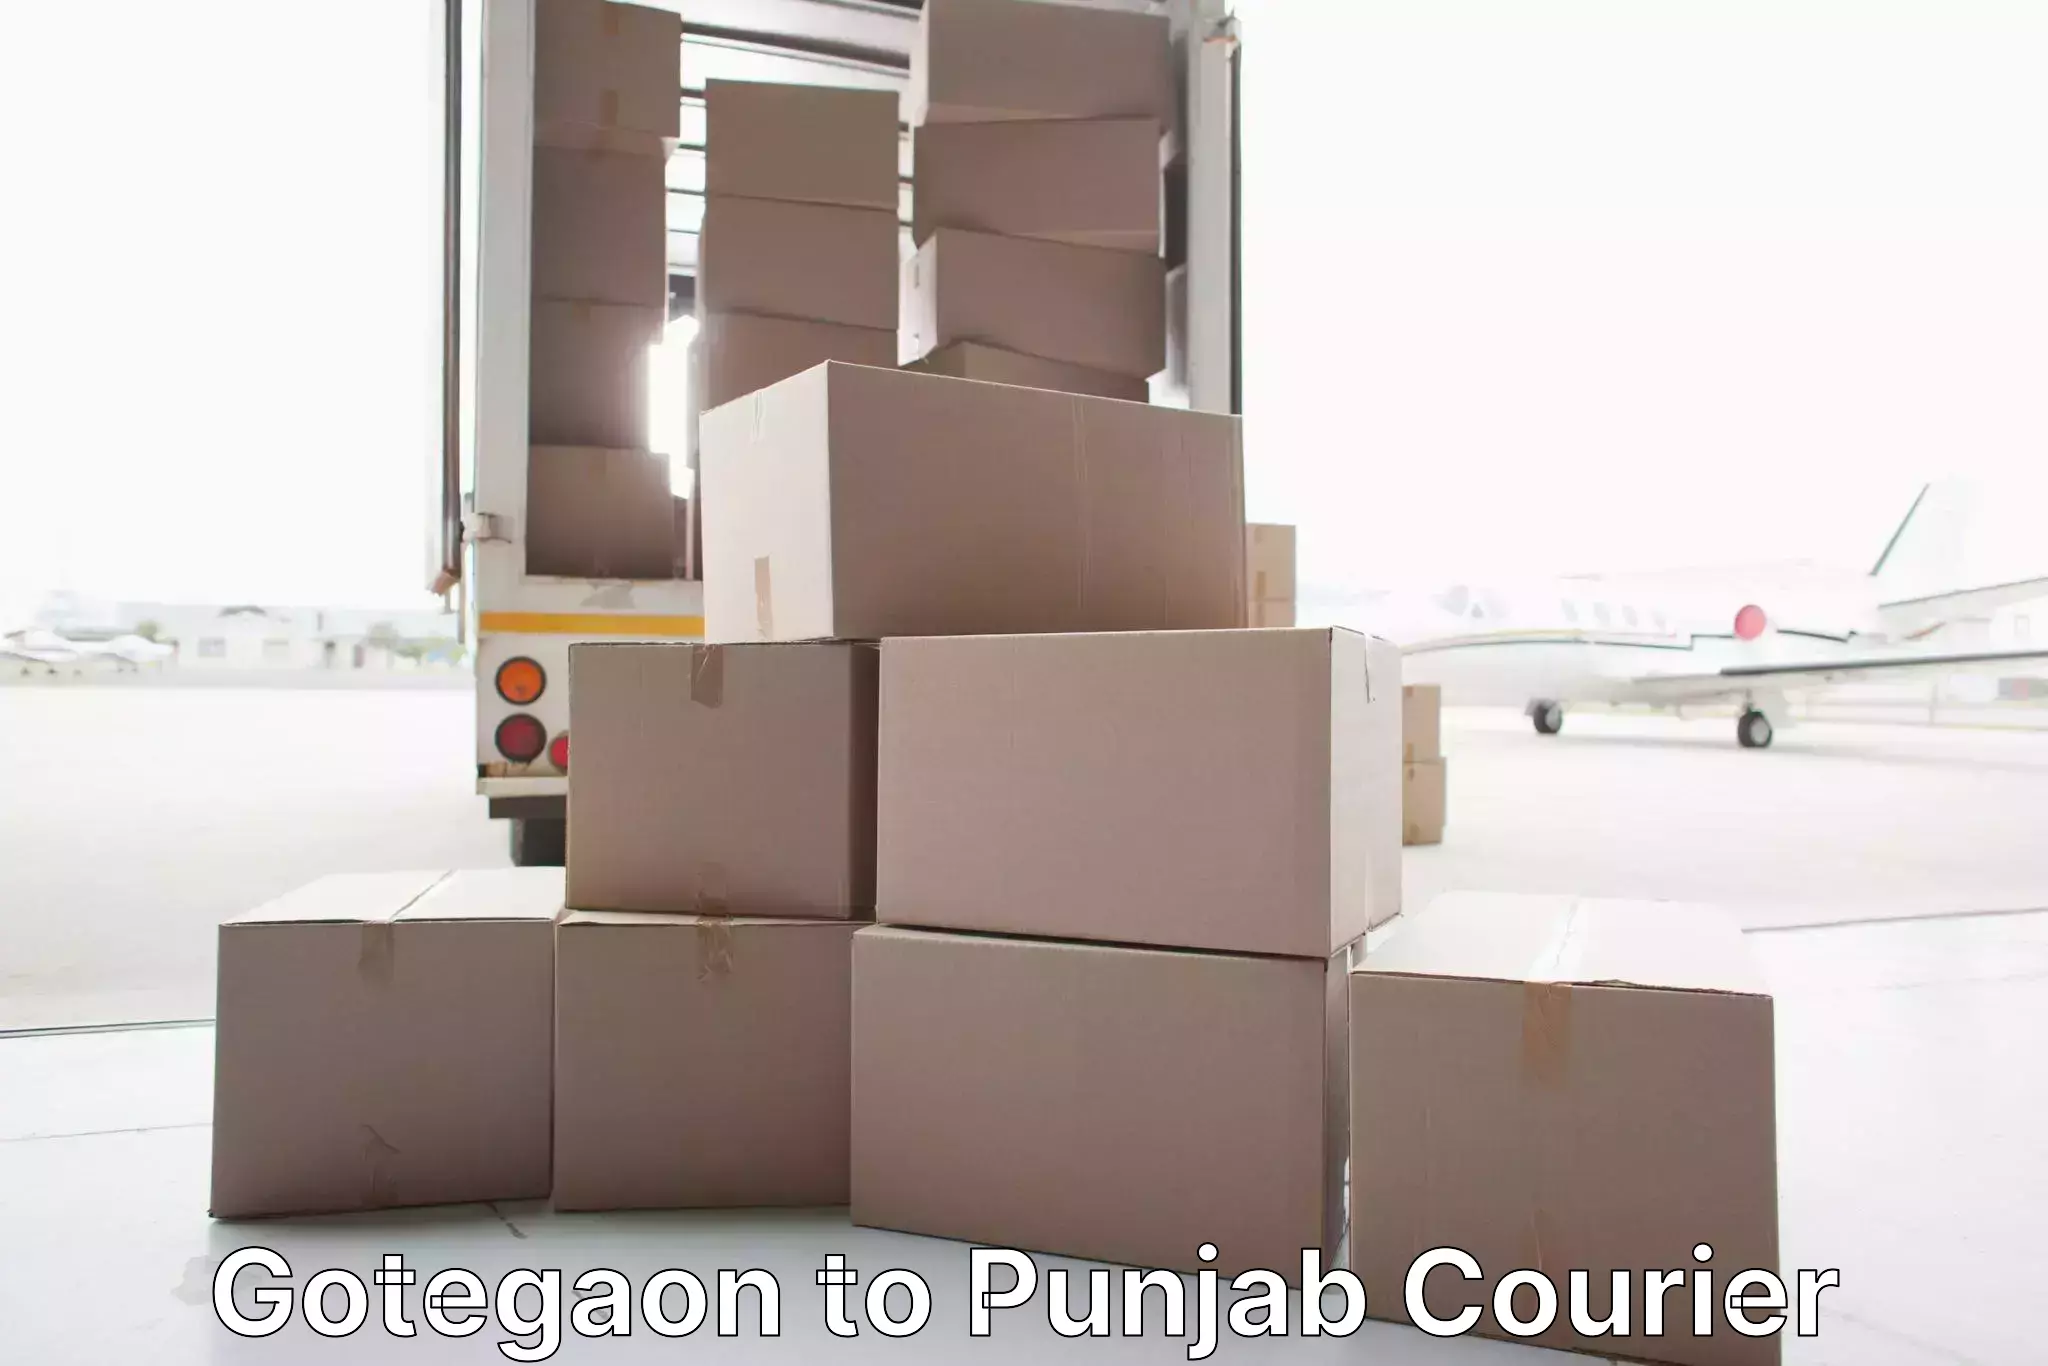 Specialized moving company Gotegaon to Punjab